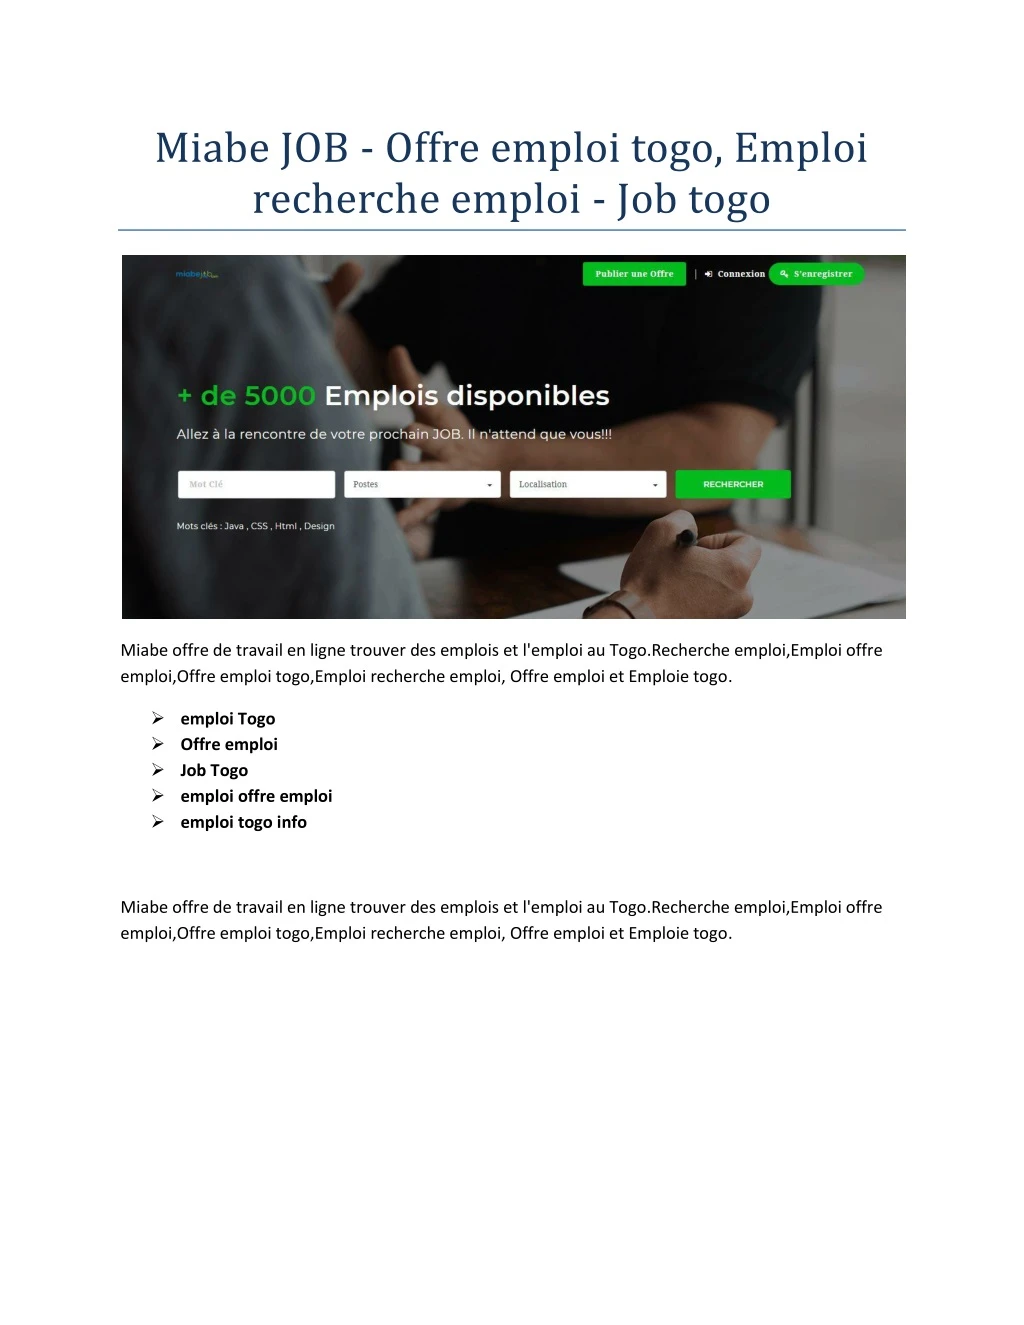 miabe job offre emploi togo emploi recherche